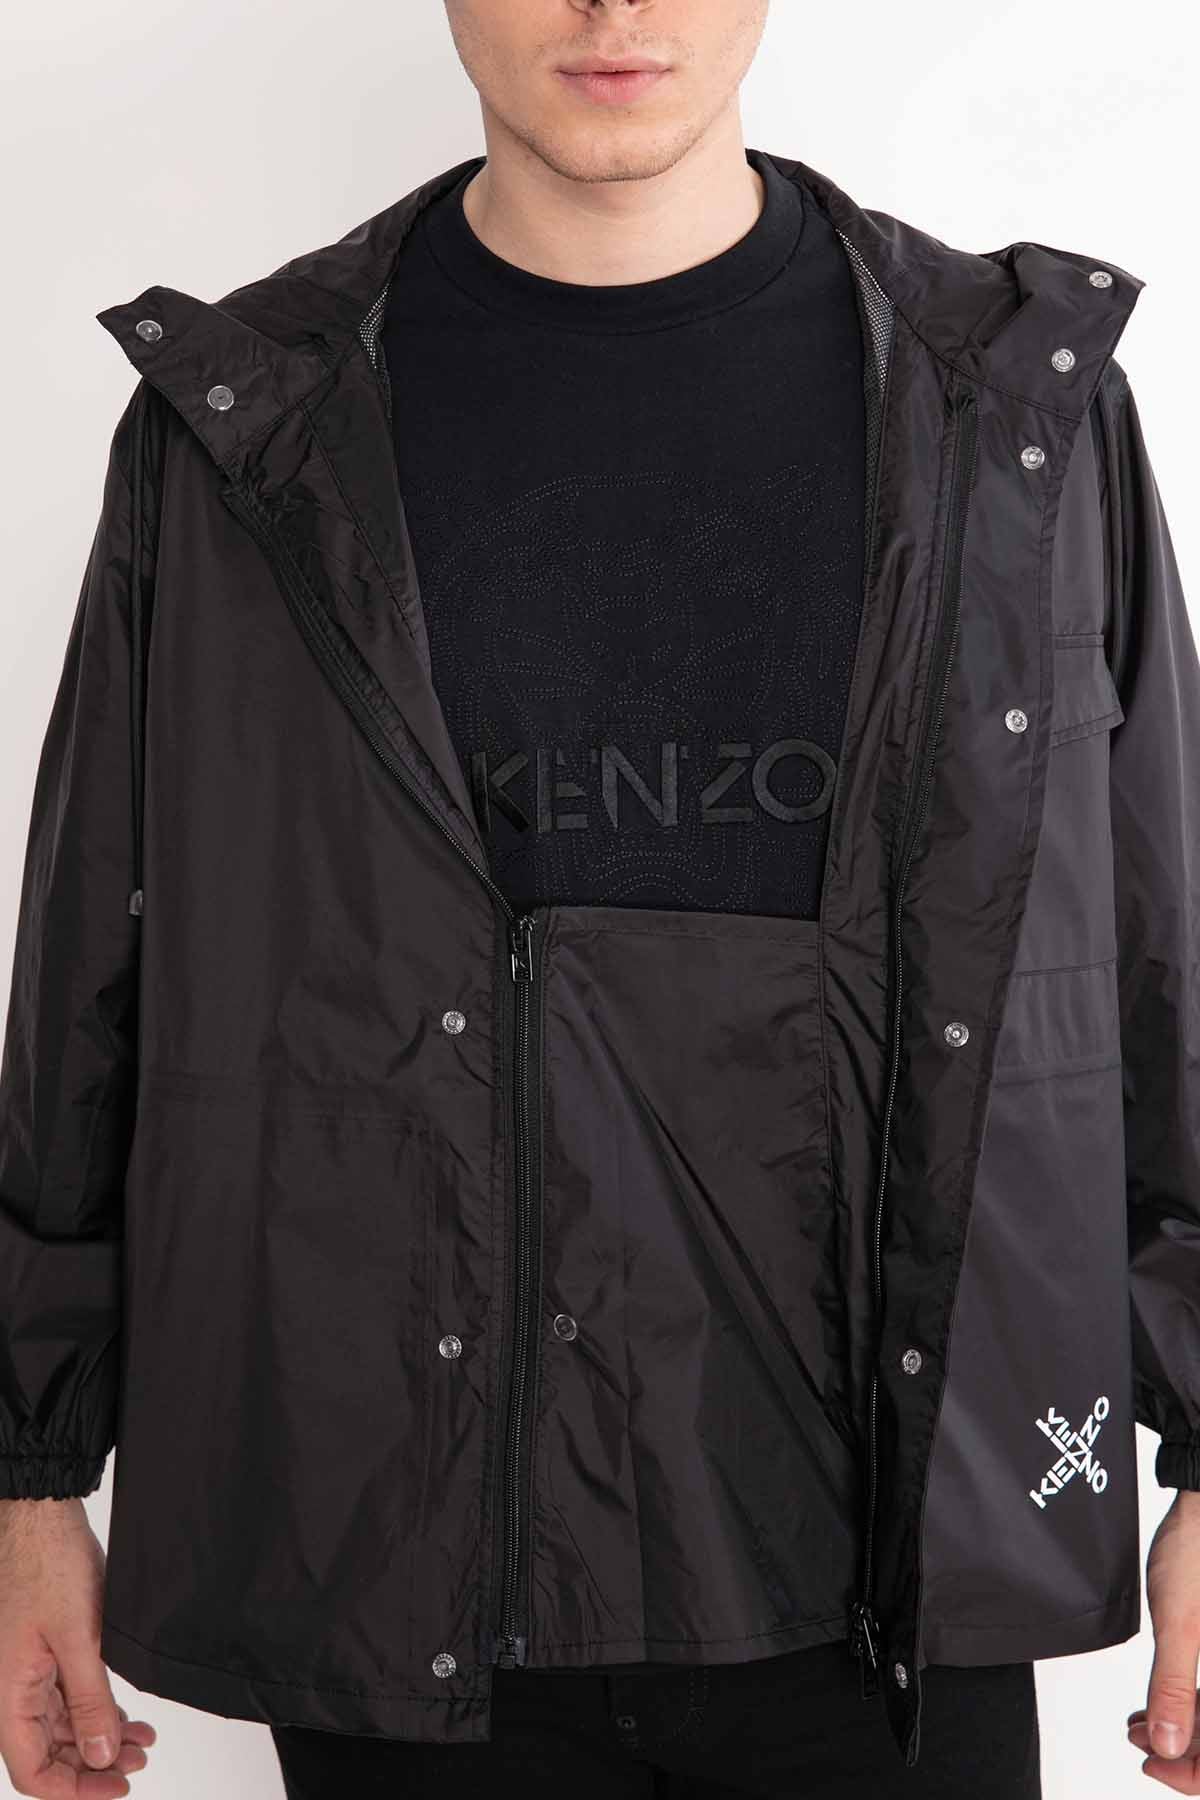 Kenzo Sport Mont-Libas Trendy Fashion Store